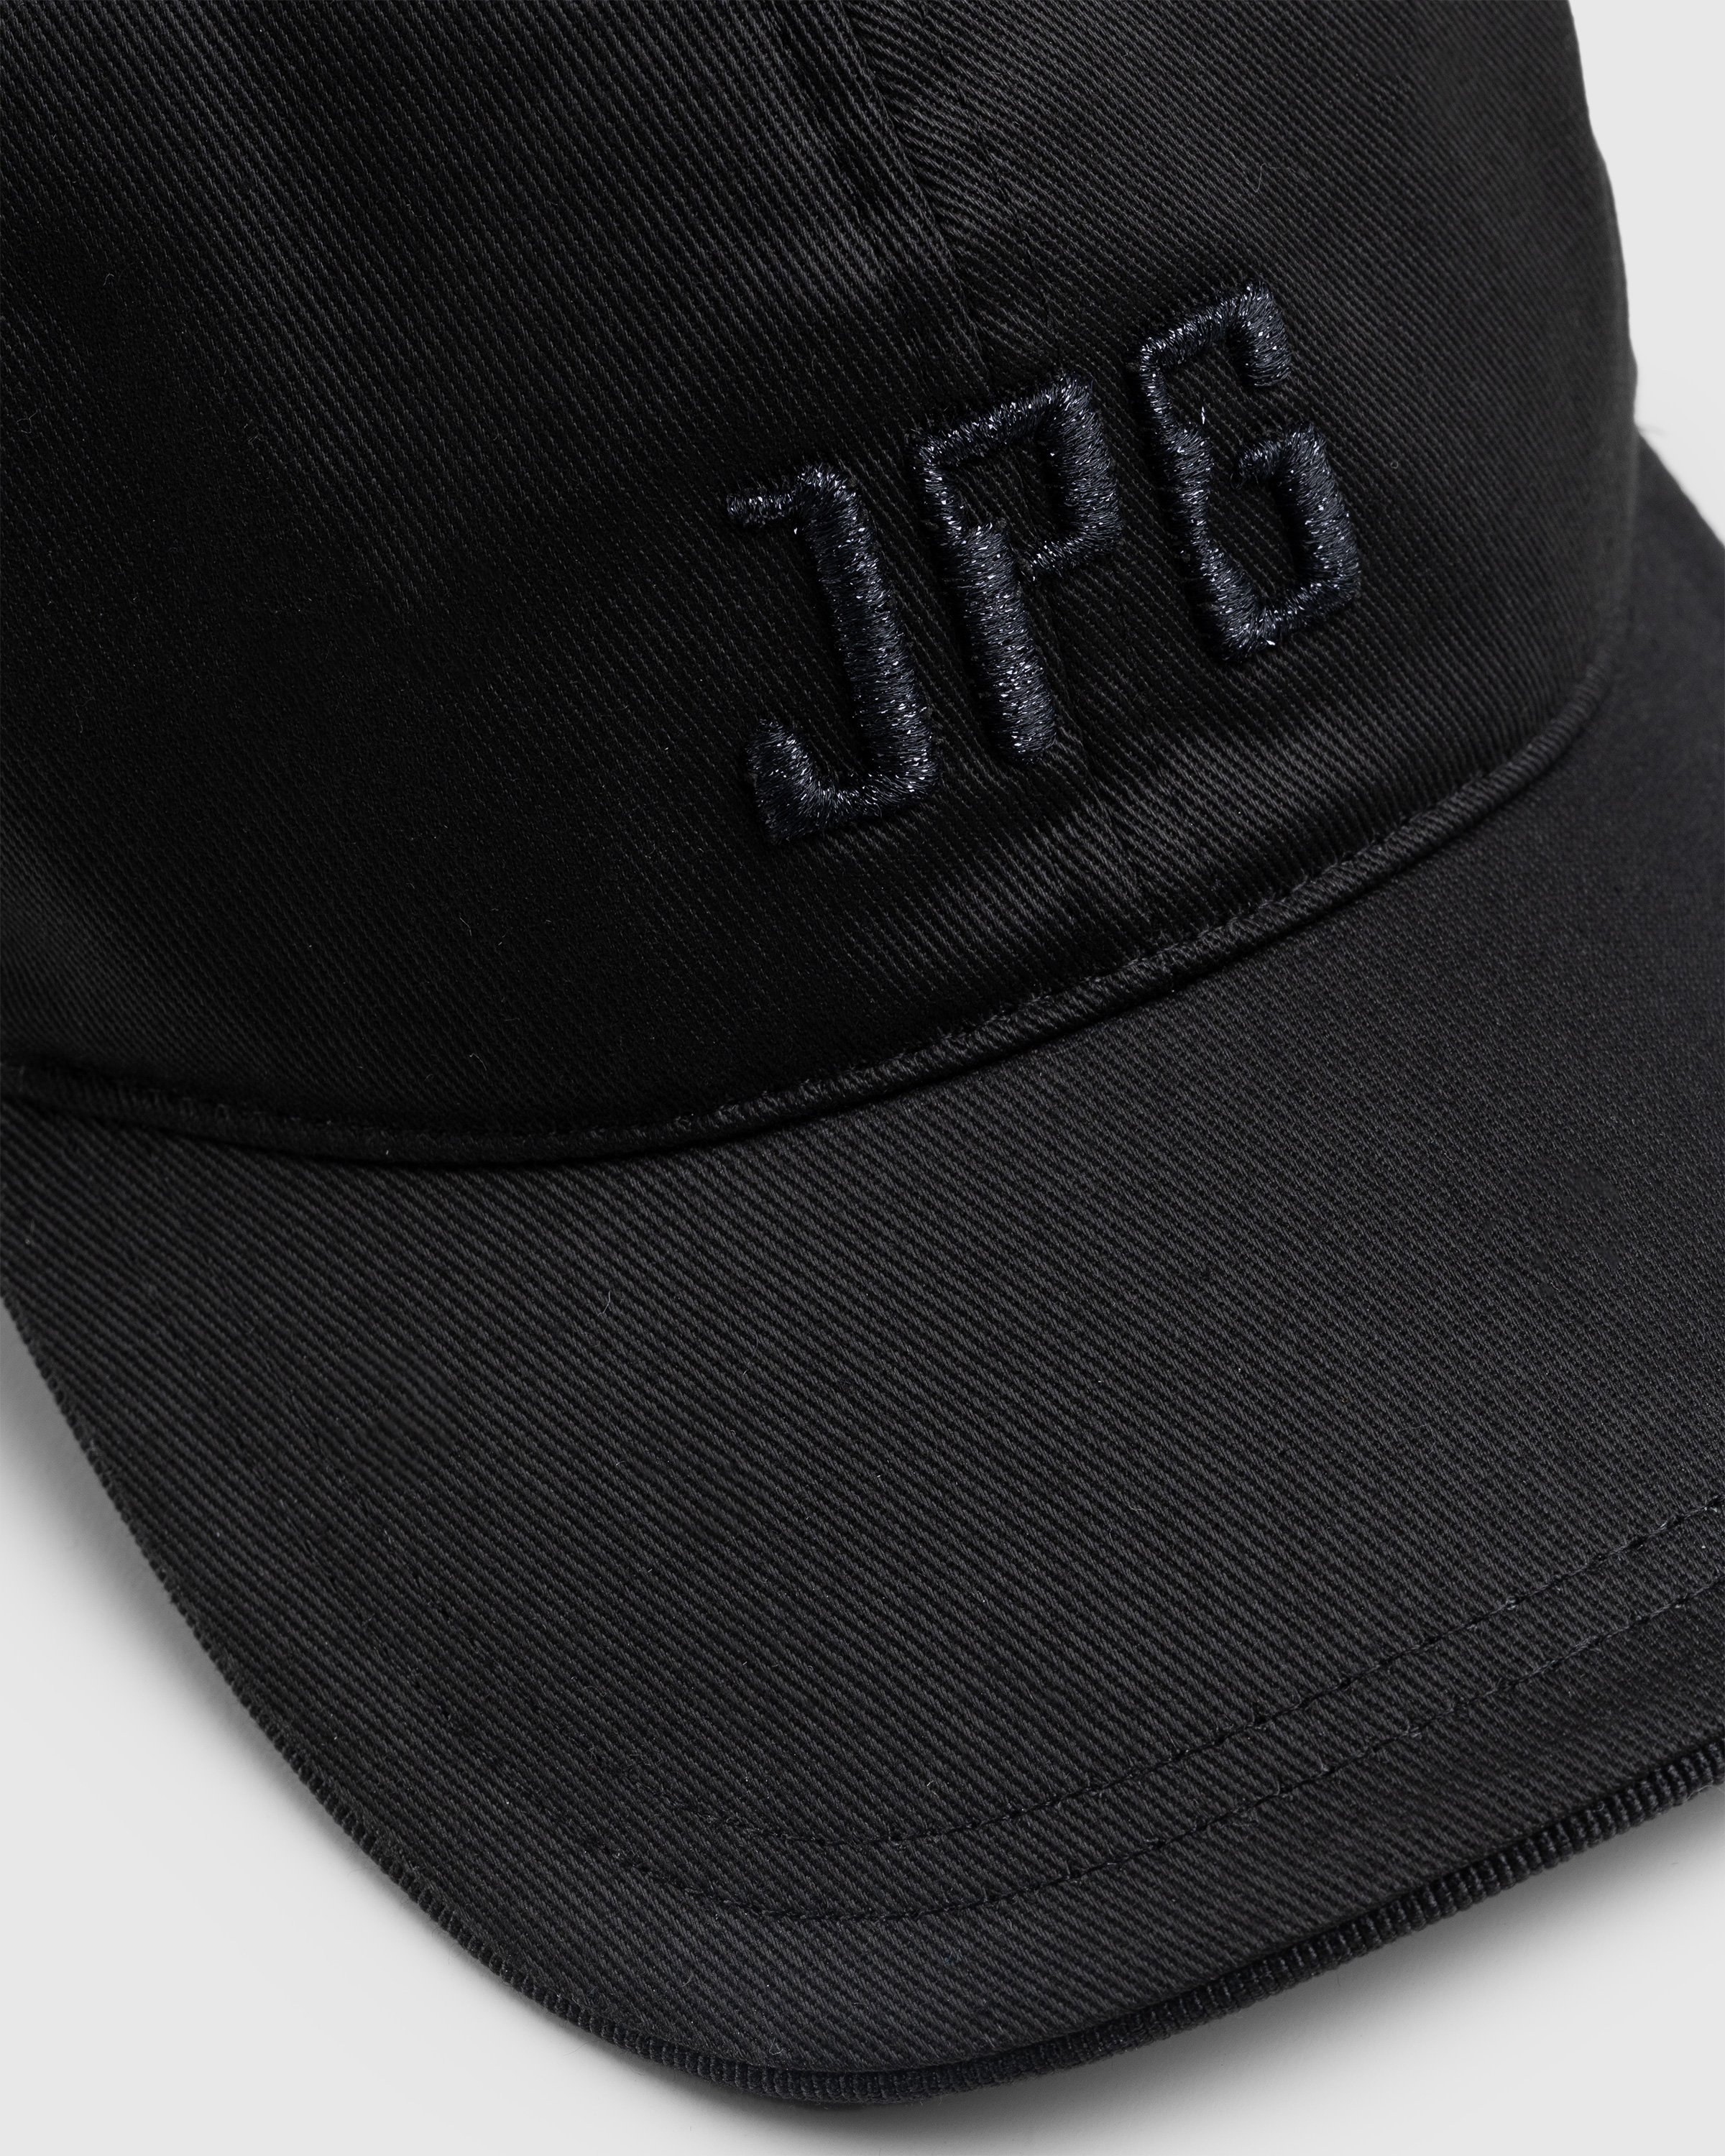 Jean Paul Gaultier - JPG Cap - Accessories - Black - Image 4